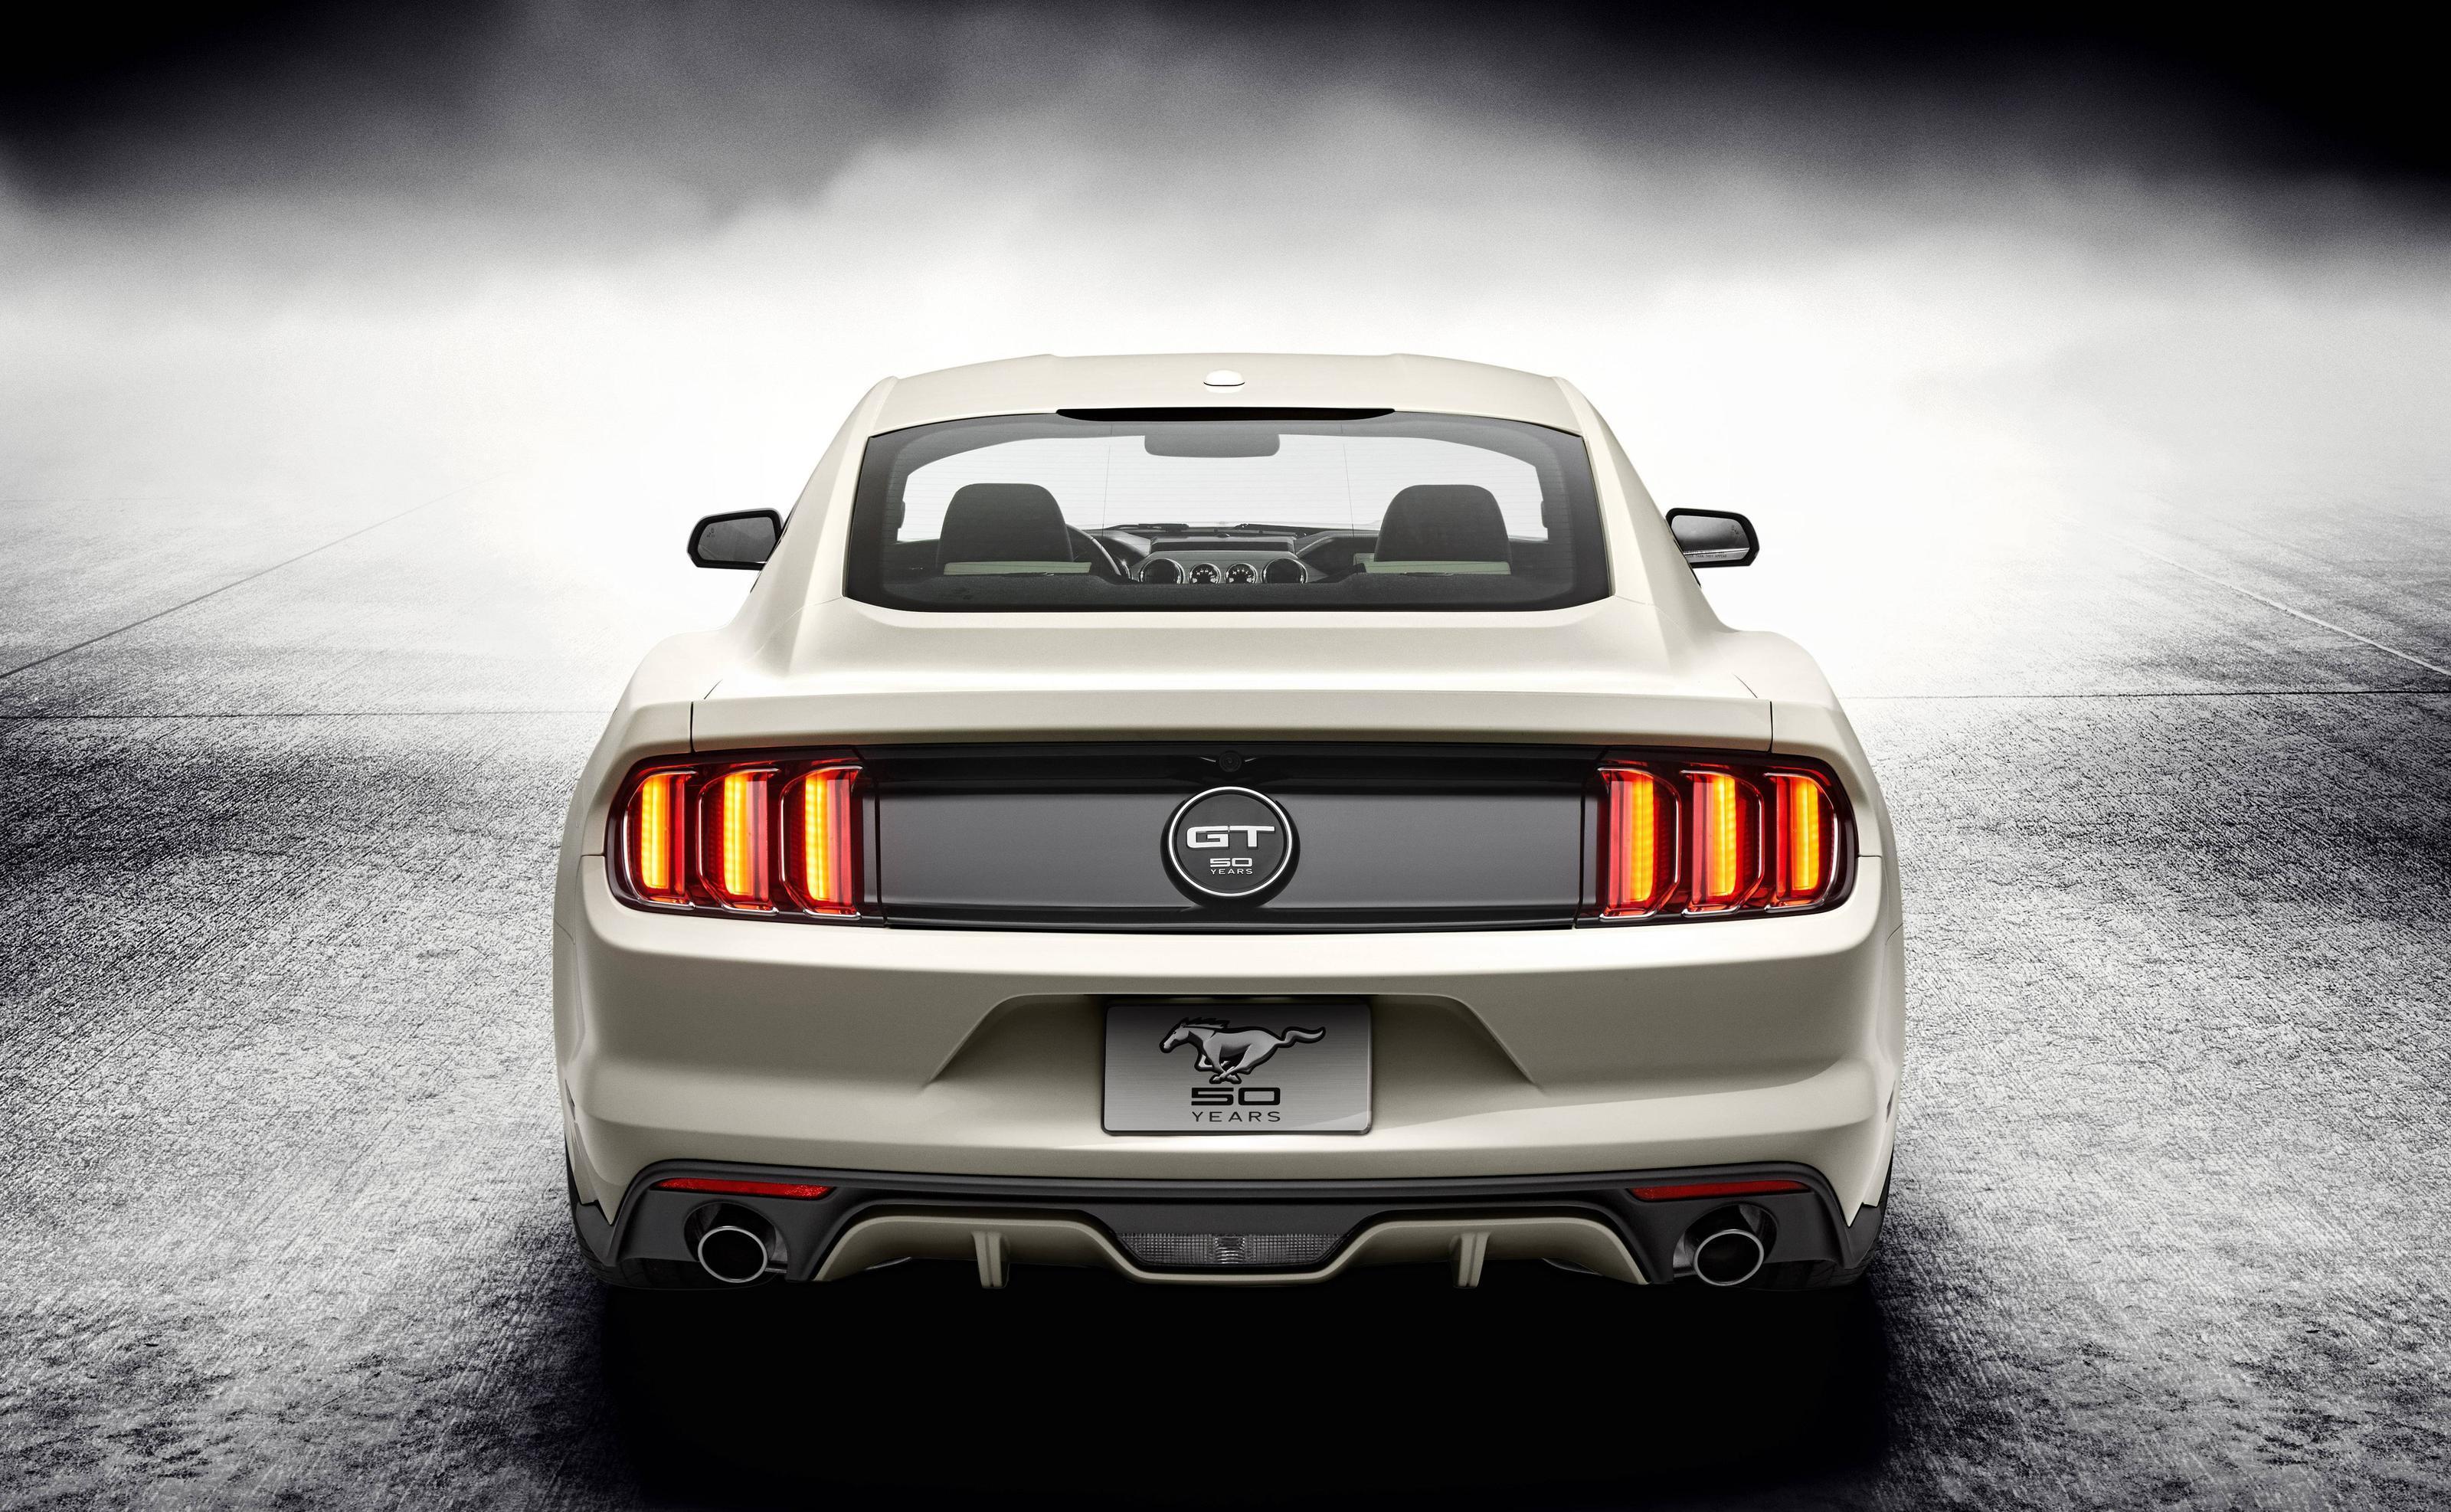 Mustang. TFLCar.com: Automotive News, Views and ReviewsThe